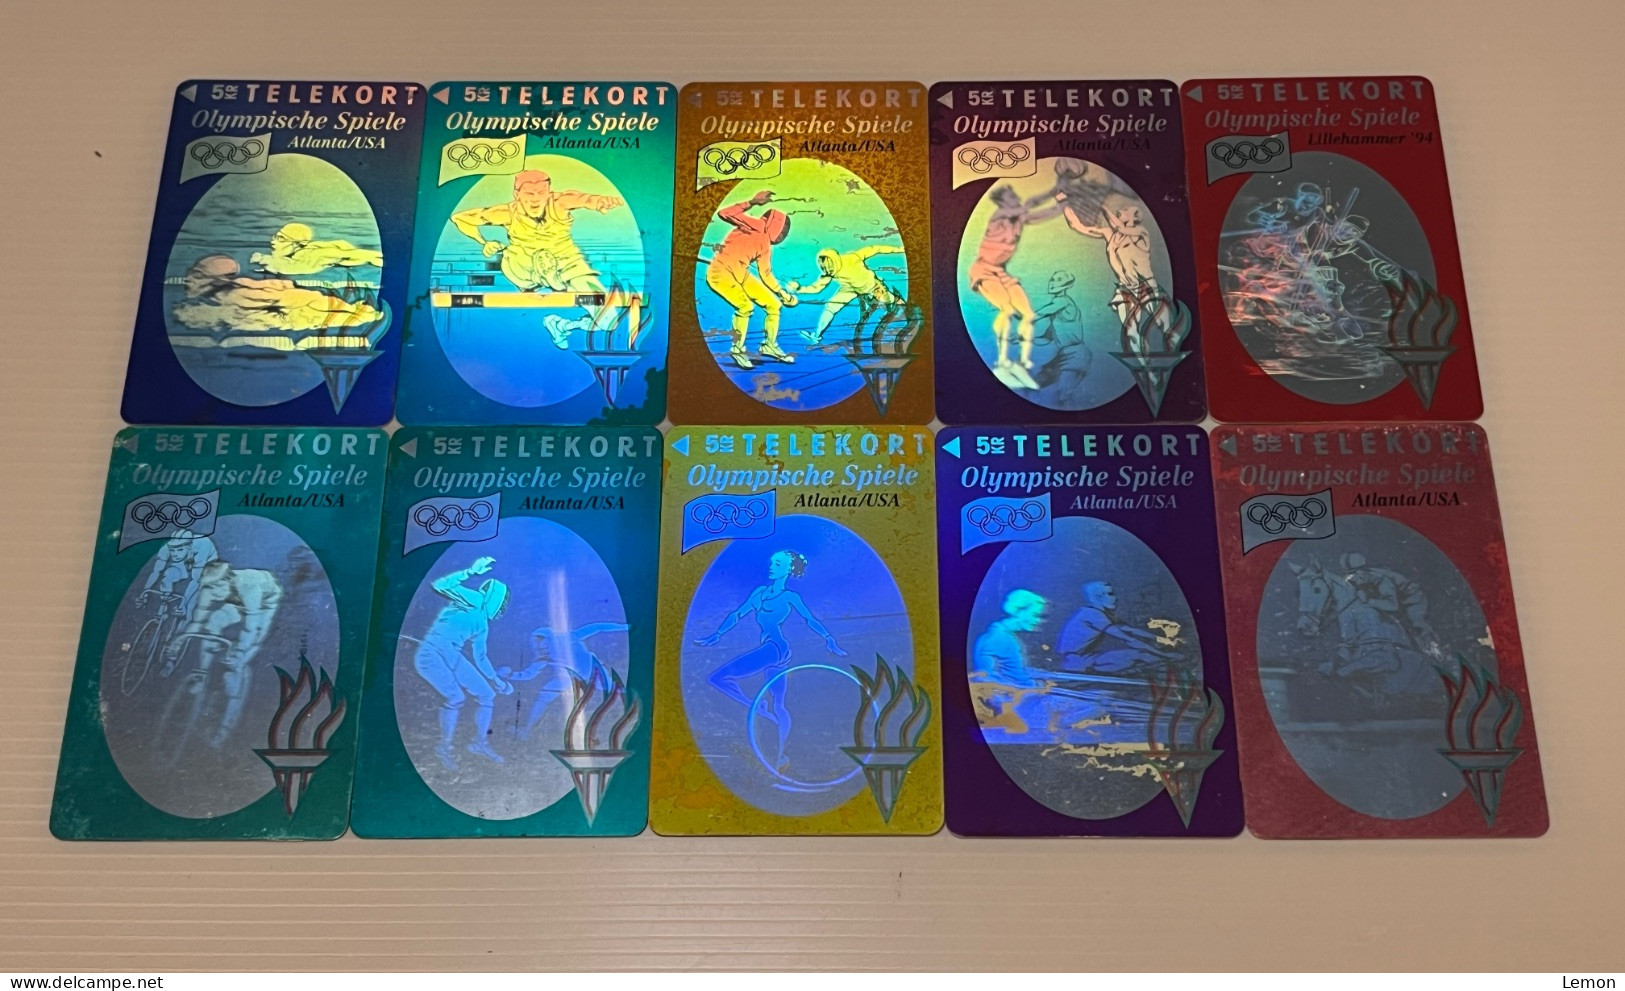 Mint Denmark / Danmark Phonecard, Hologram Atlanta Olympic USA - Olympische Spiele, Set Of 10 Mint Cards - Dinamarca